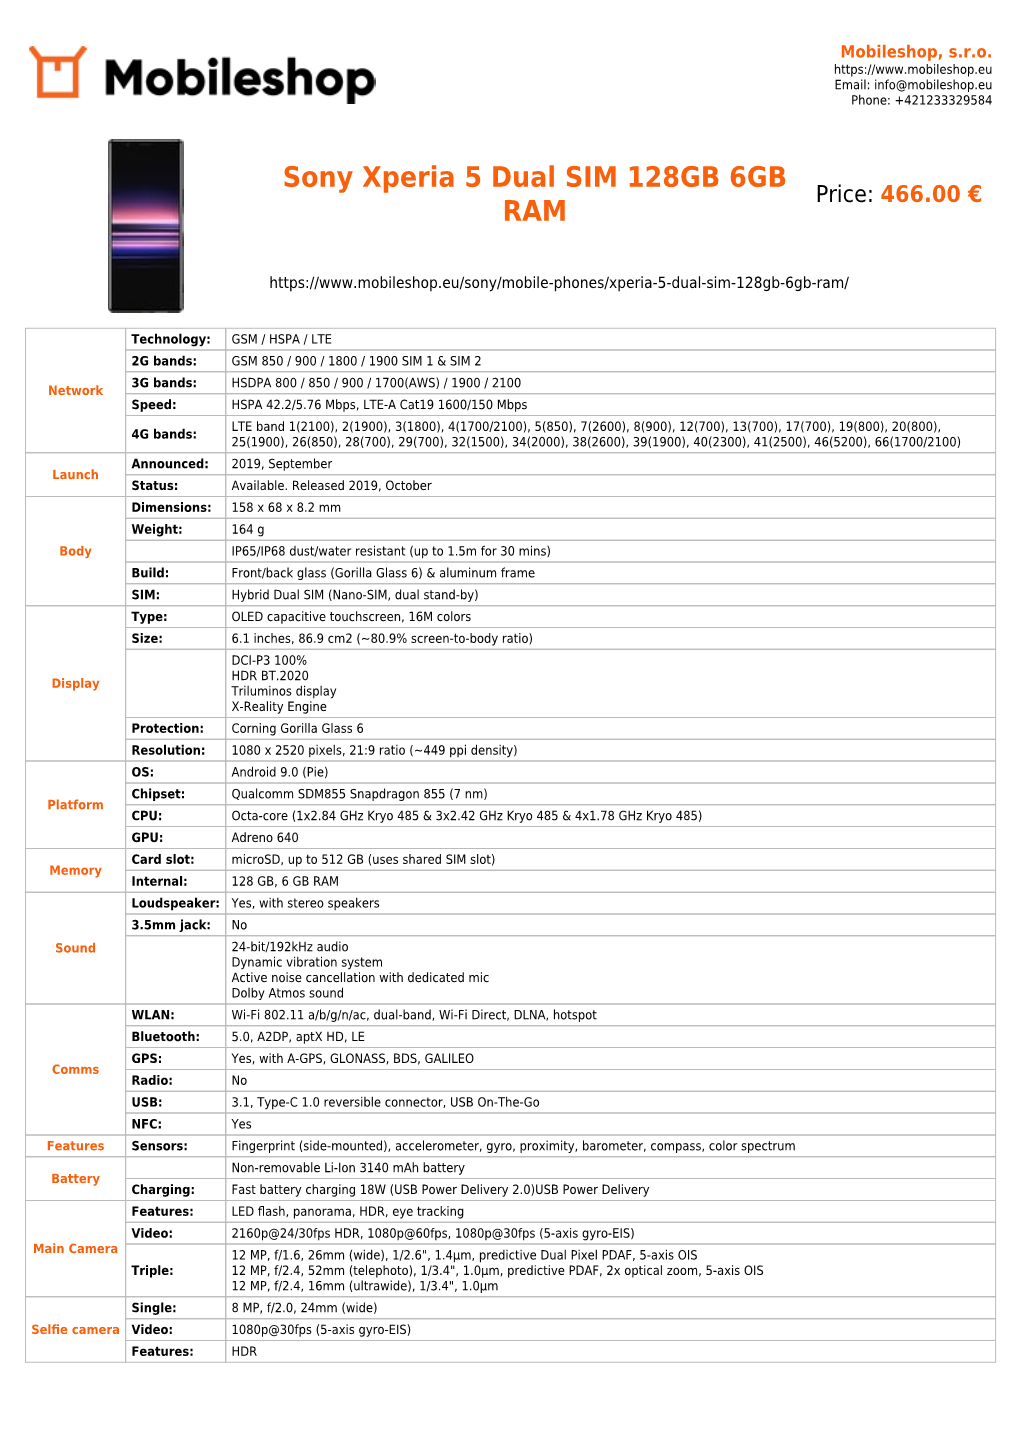 Sony Xperia 5 Dual SIM 128GB 6GB Price: 466.00 € RAM